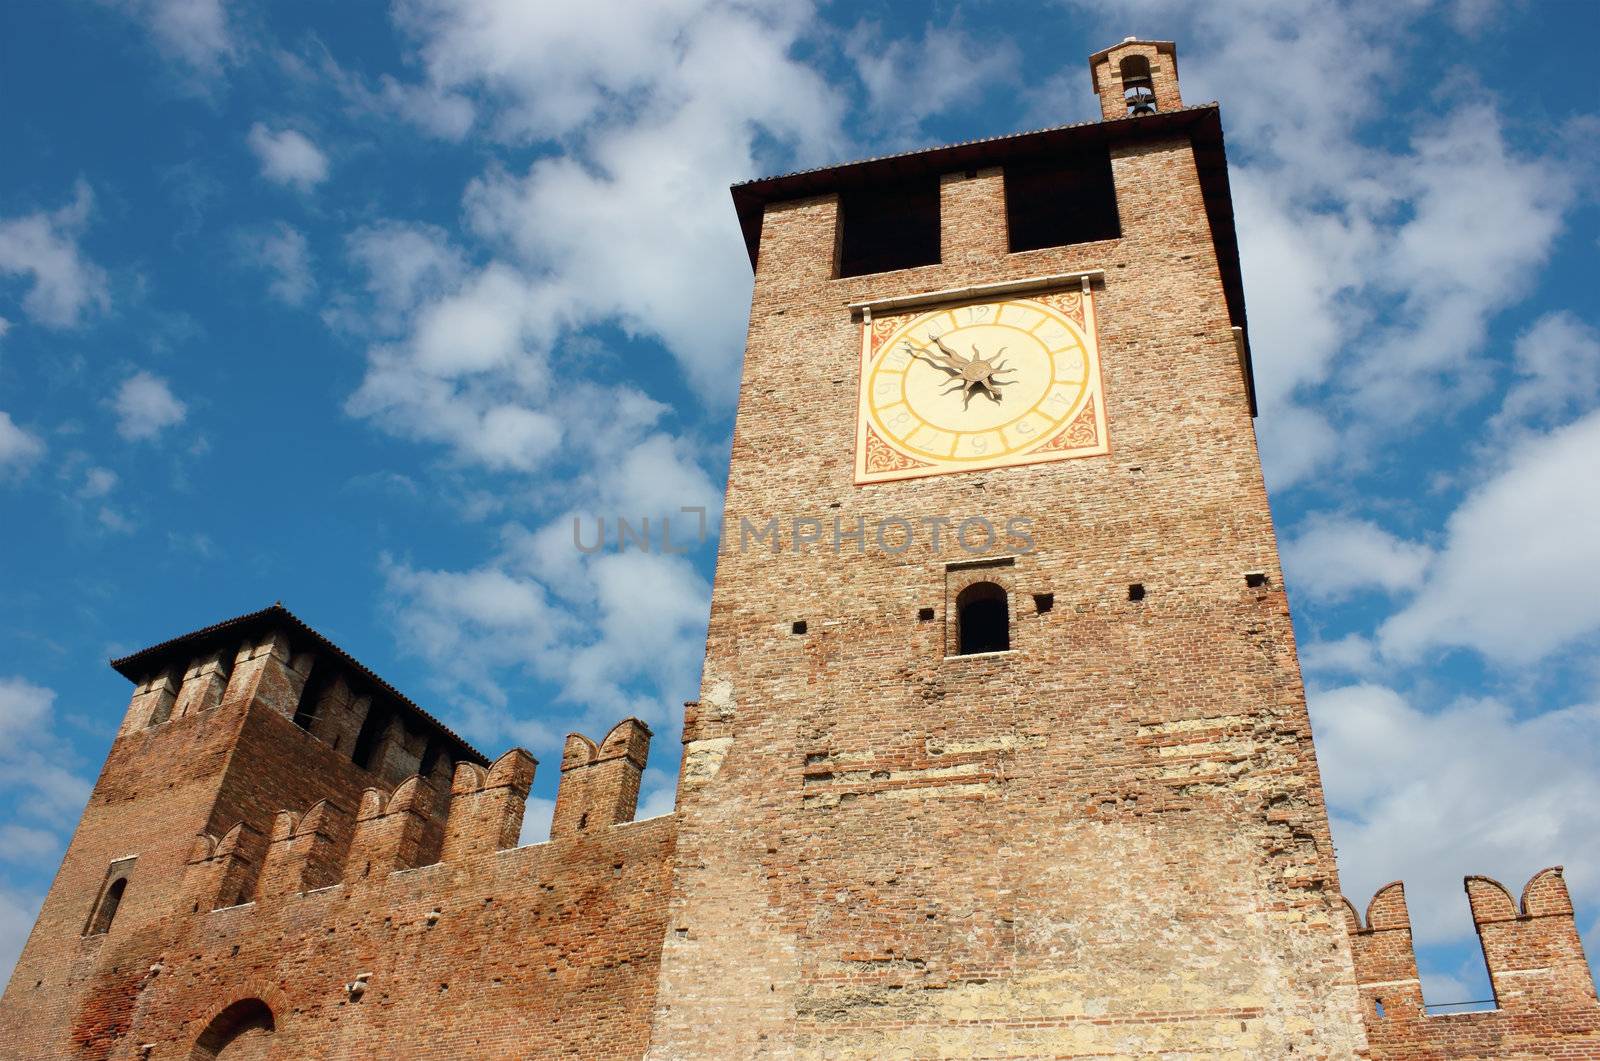 Castelvecchio in Verona by kirilart